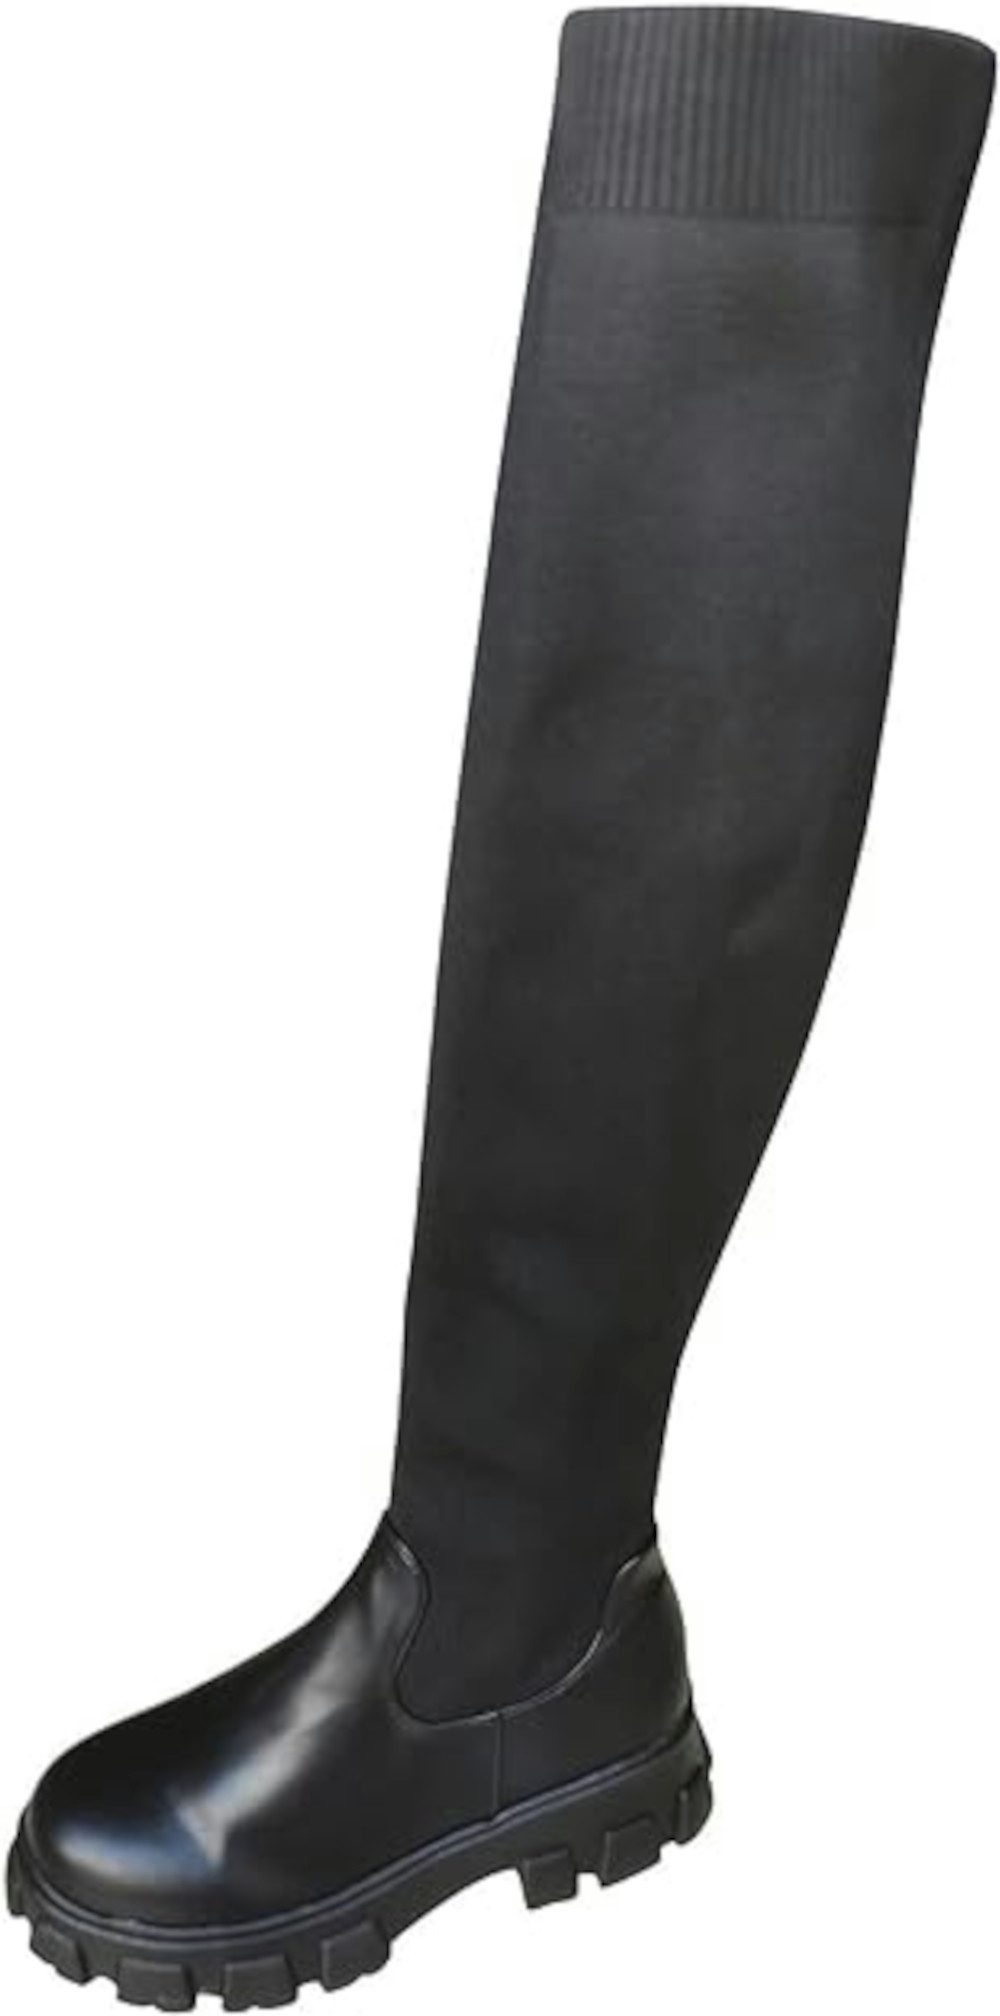 UE Stock Damen Overknee Stiefel Strumpfstiefel mit Blockabsatz Gr. 41 Schwarz Overkneestiefel Komfort für den Alltag